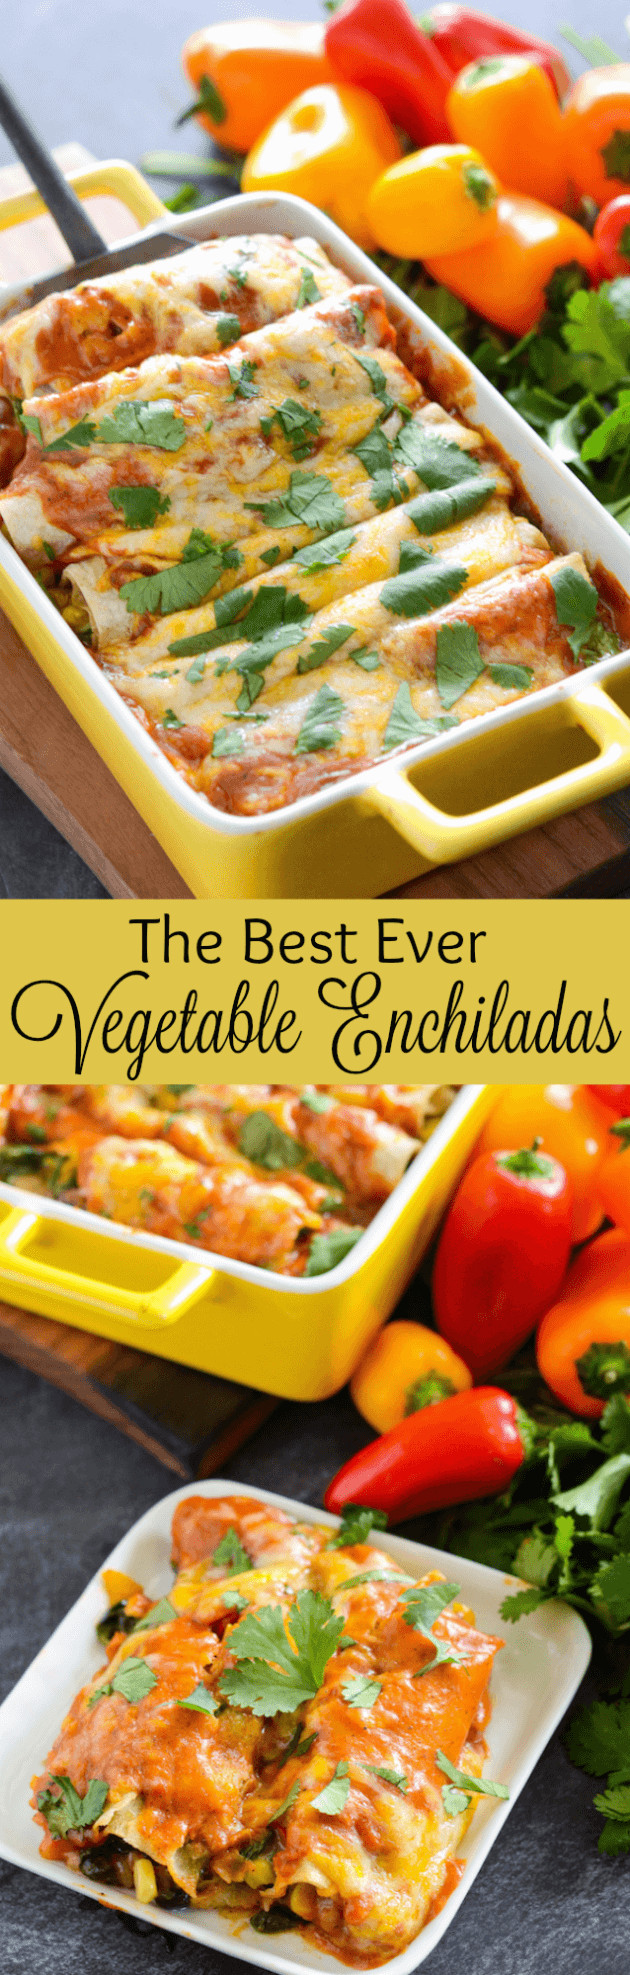 Enchilada Recipes Vegetarian
 The Best Ve able Enchiladas